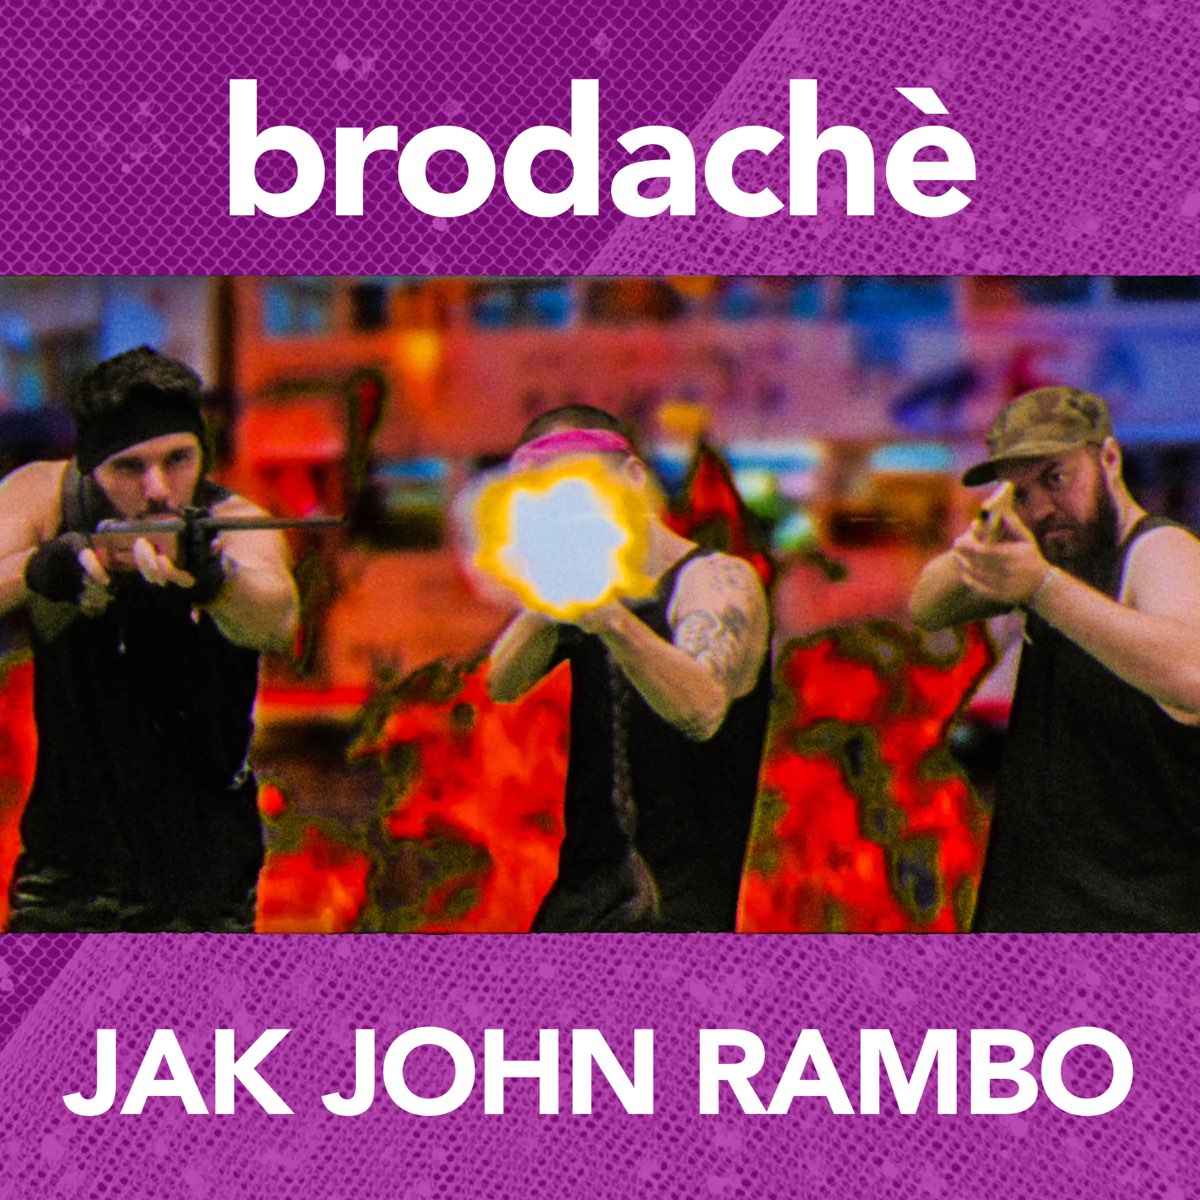 ‎Jak John Rambo - Single by brodachè on Apple Music